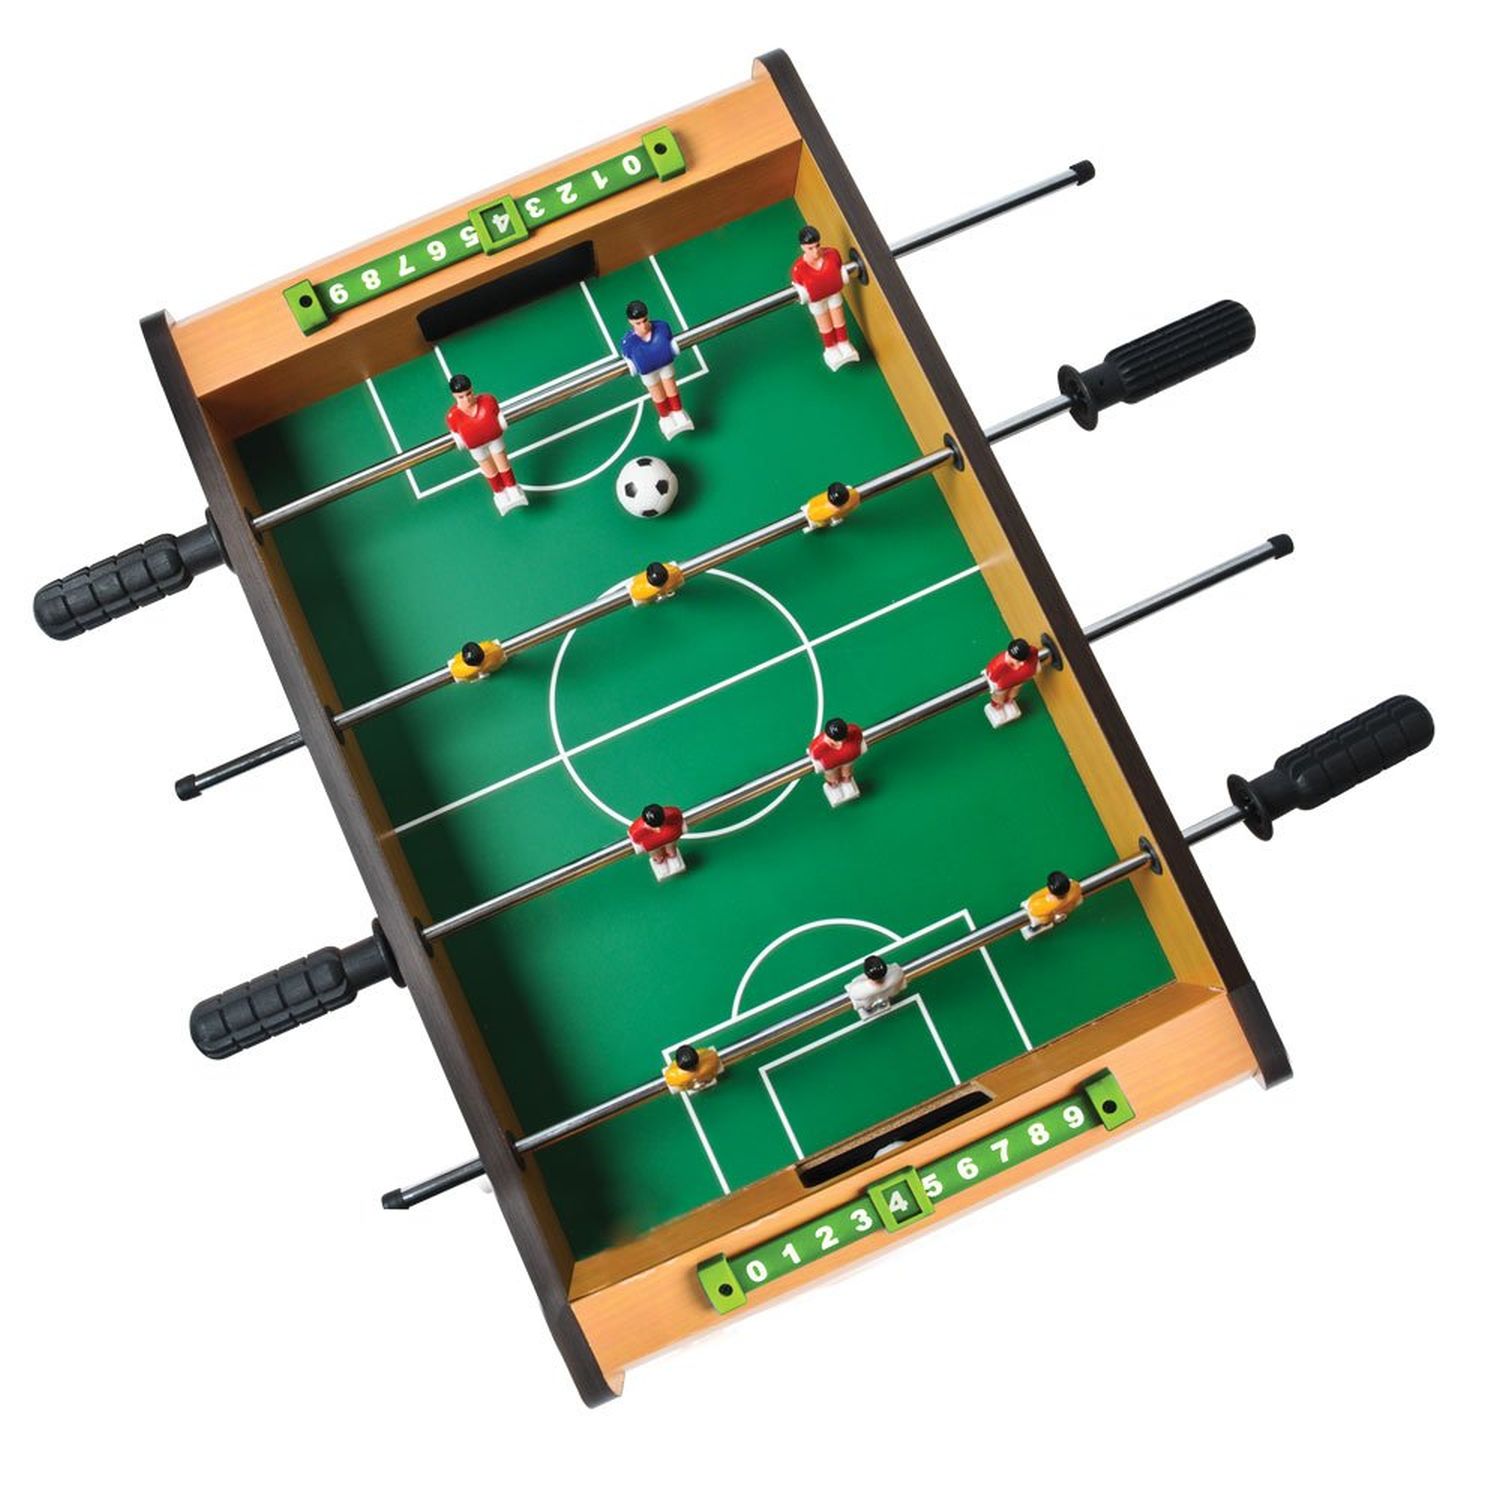 Protocol Tabletop Foosball (Soccer) Game - image 1 of 3